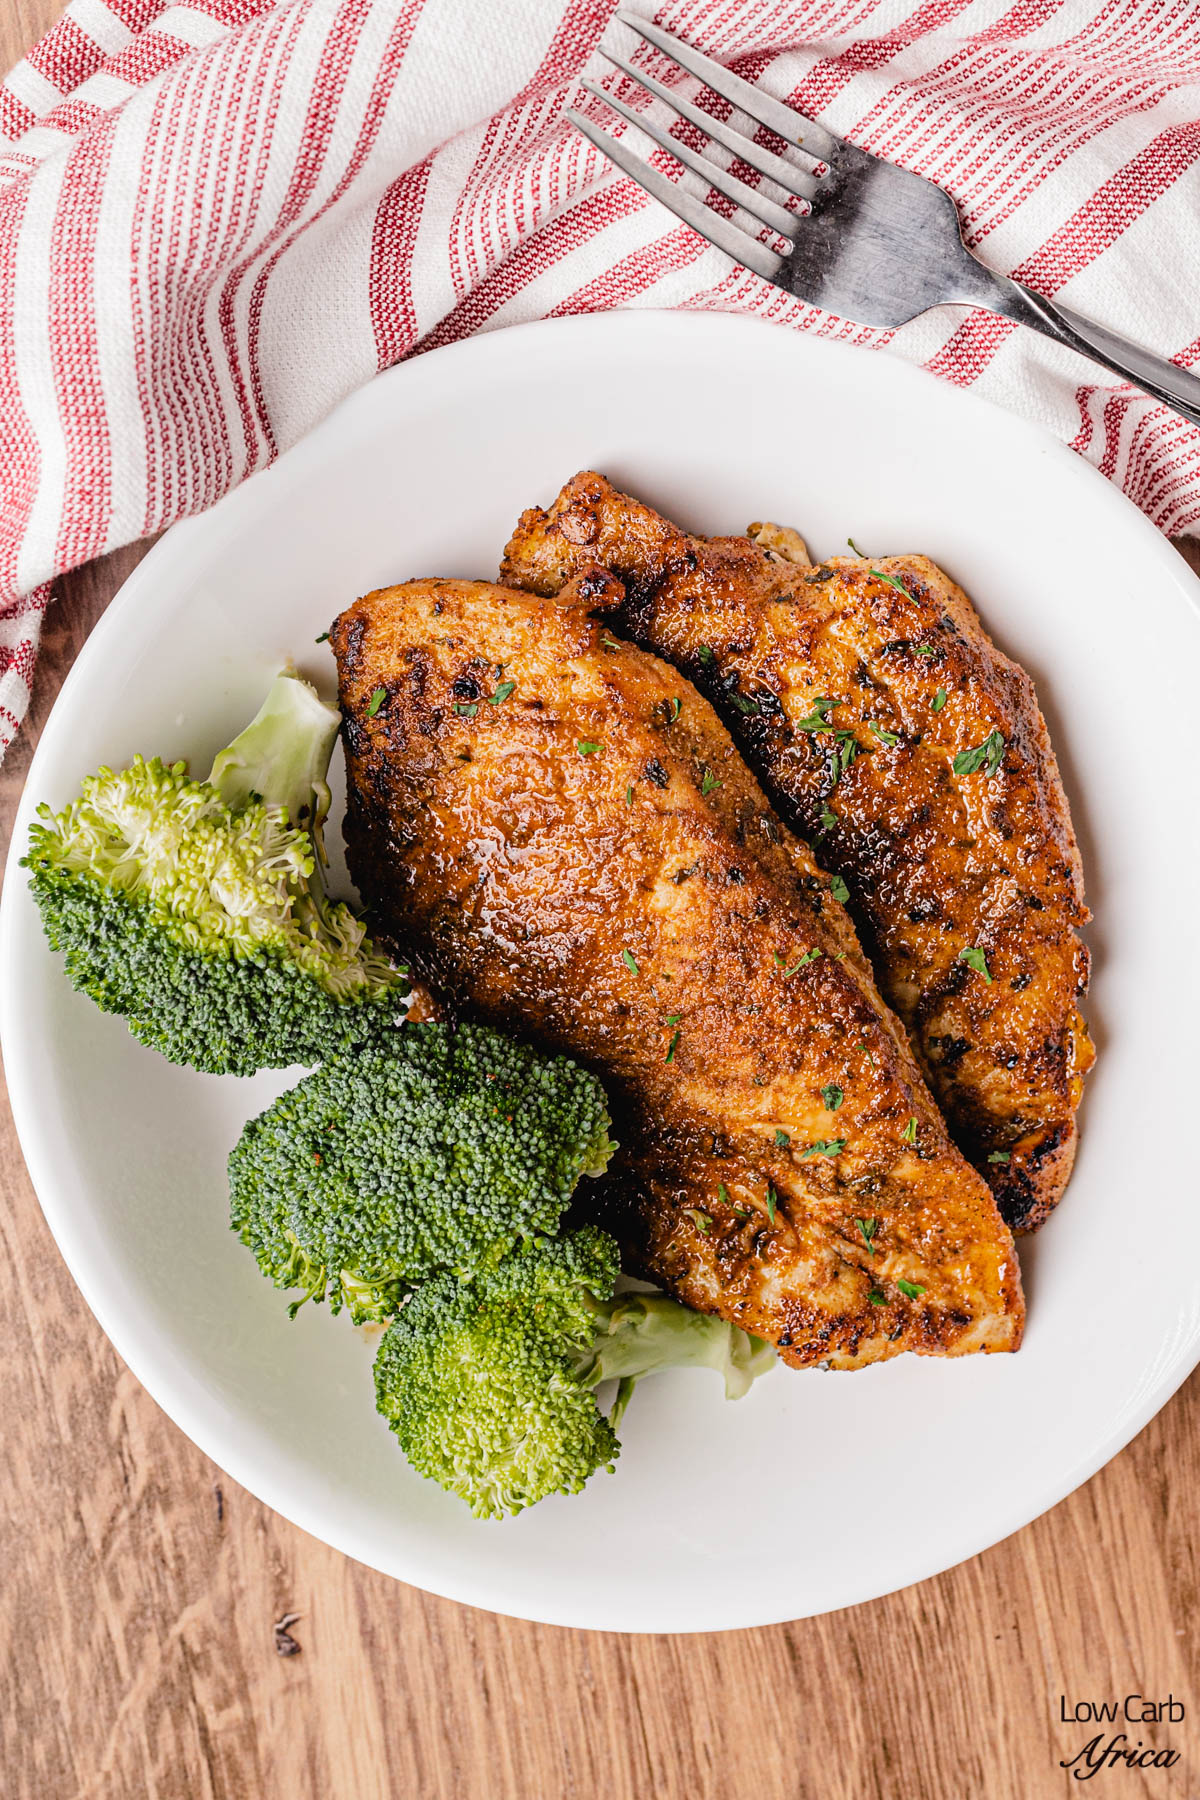 Stir-fried chicken breast with broccoli